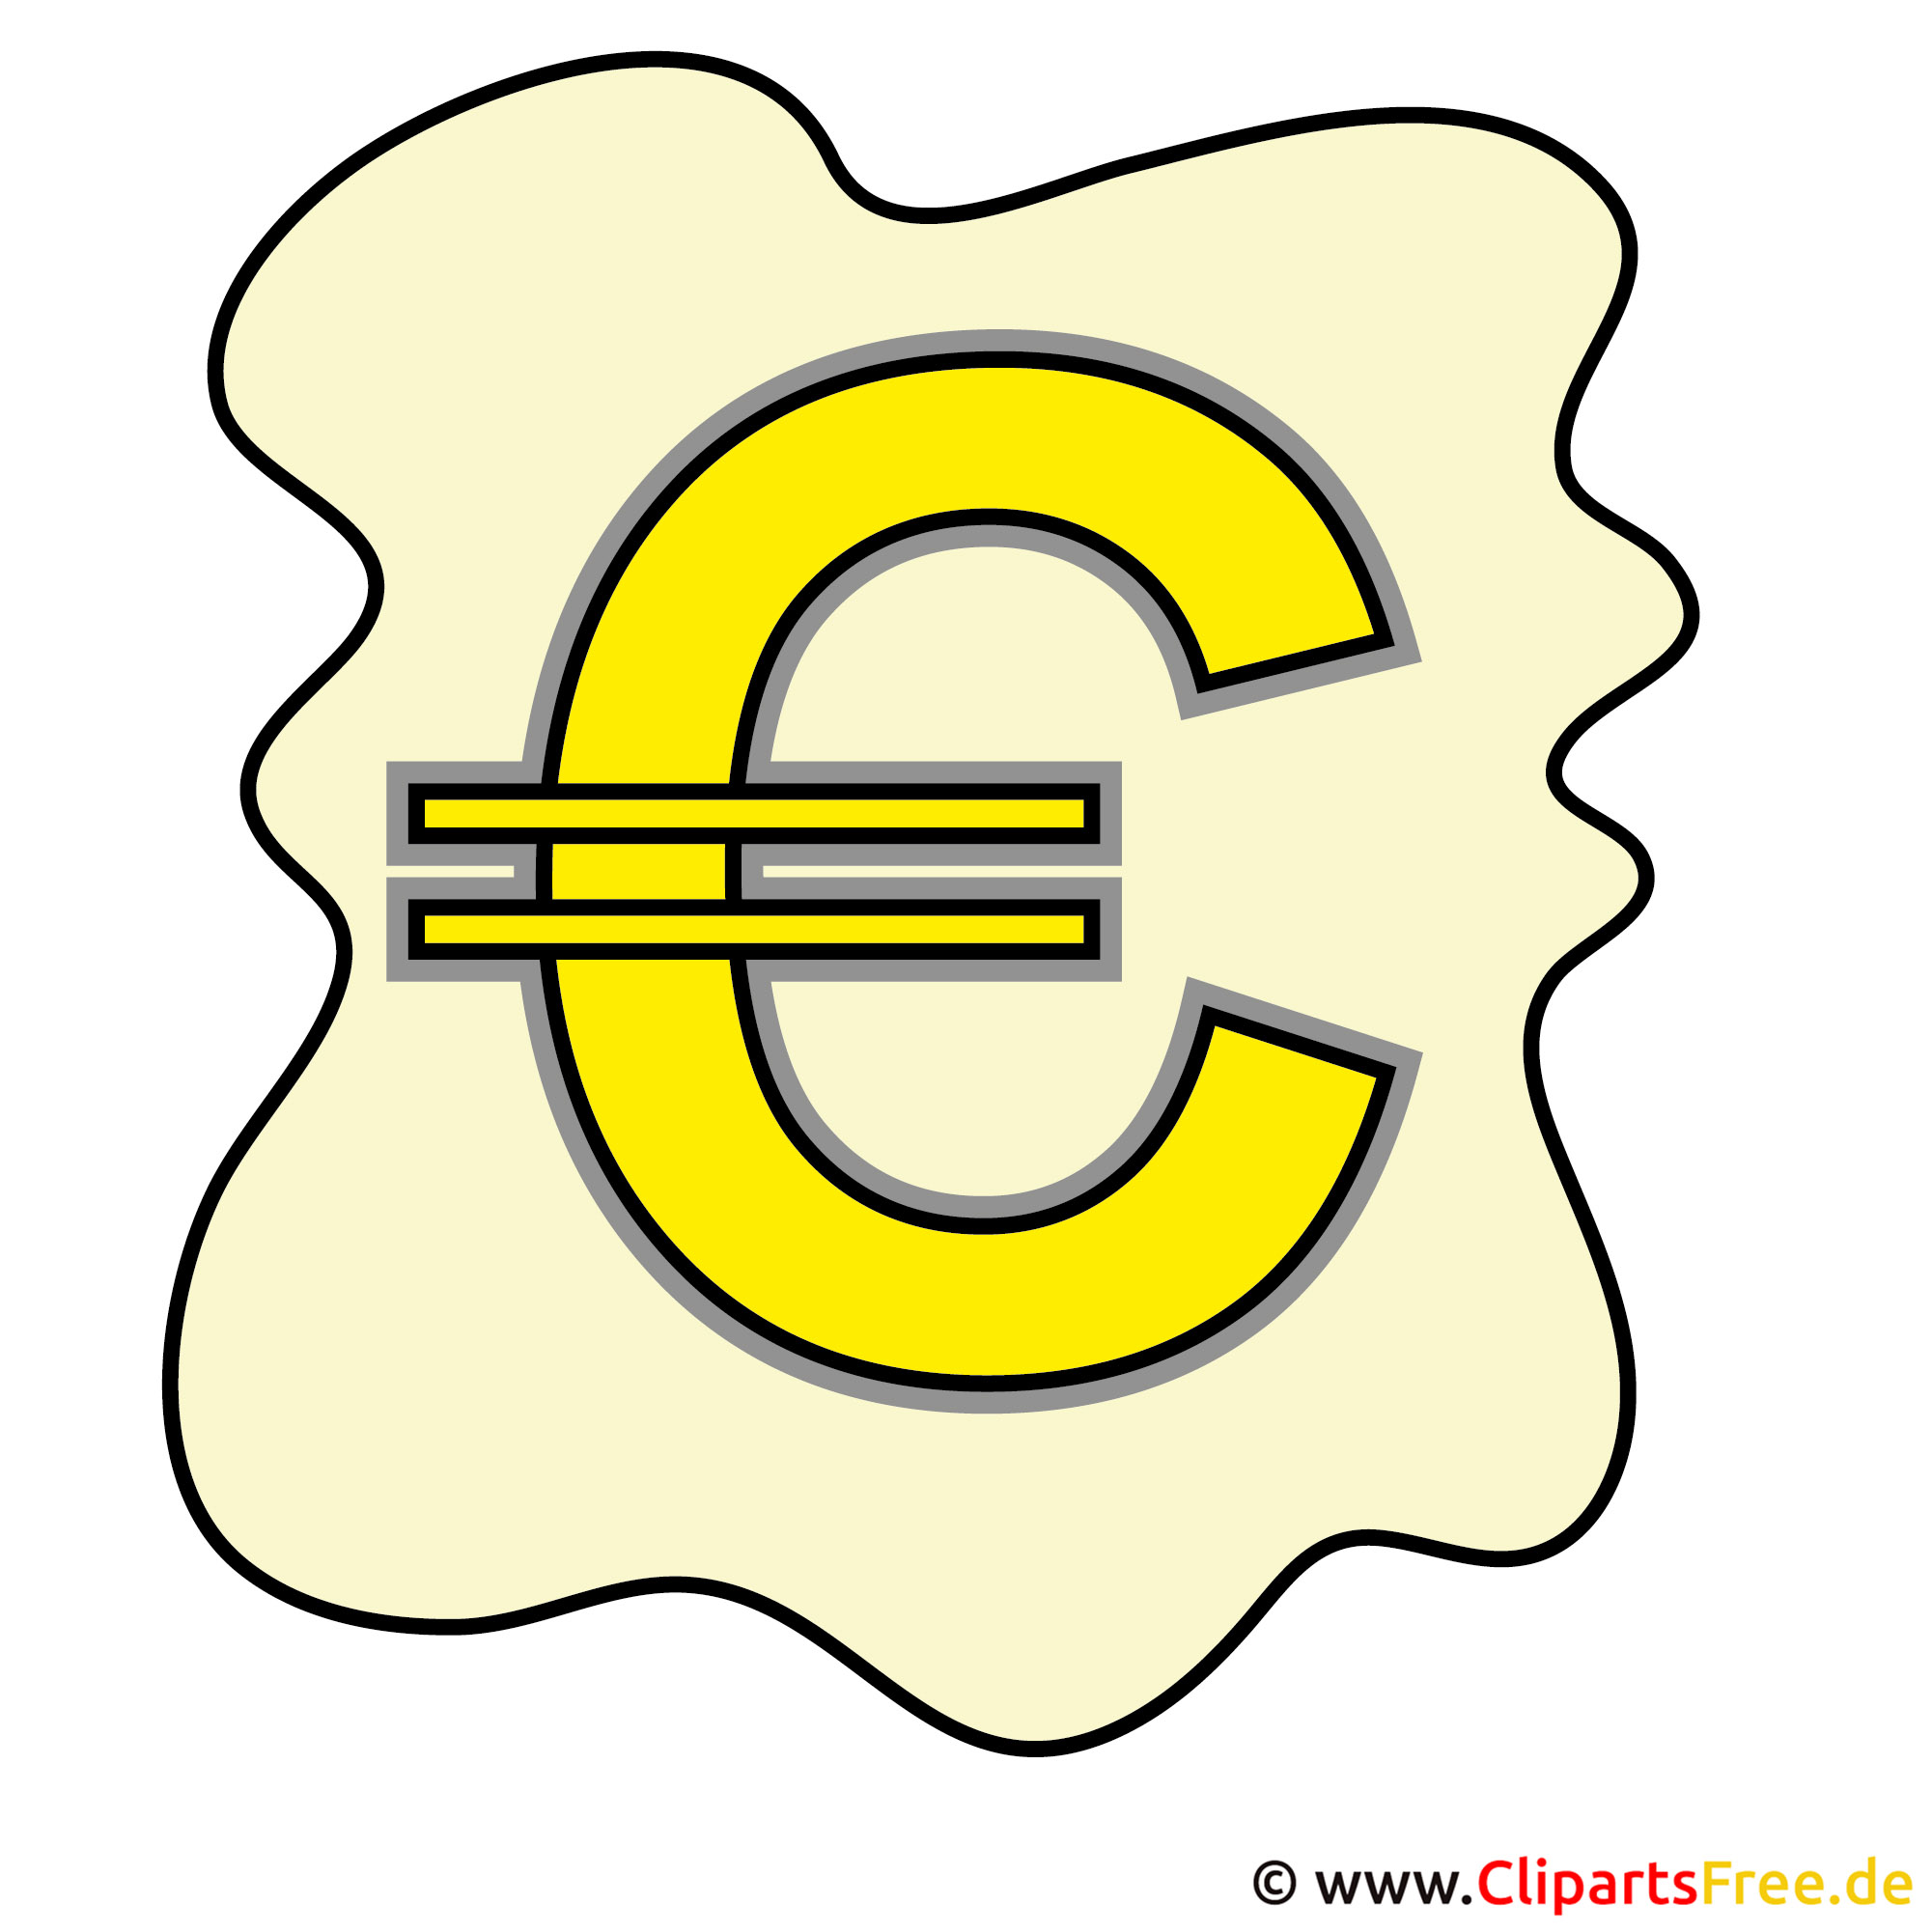 euro clipart free - photo #2